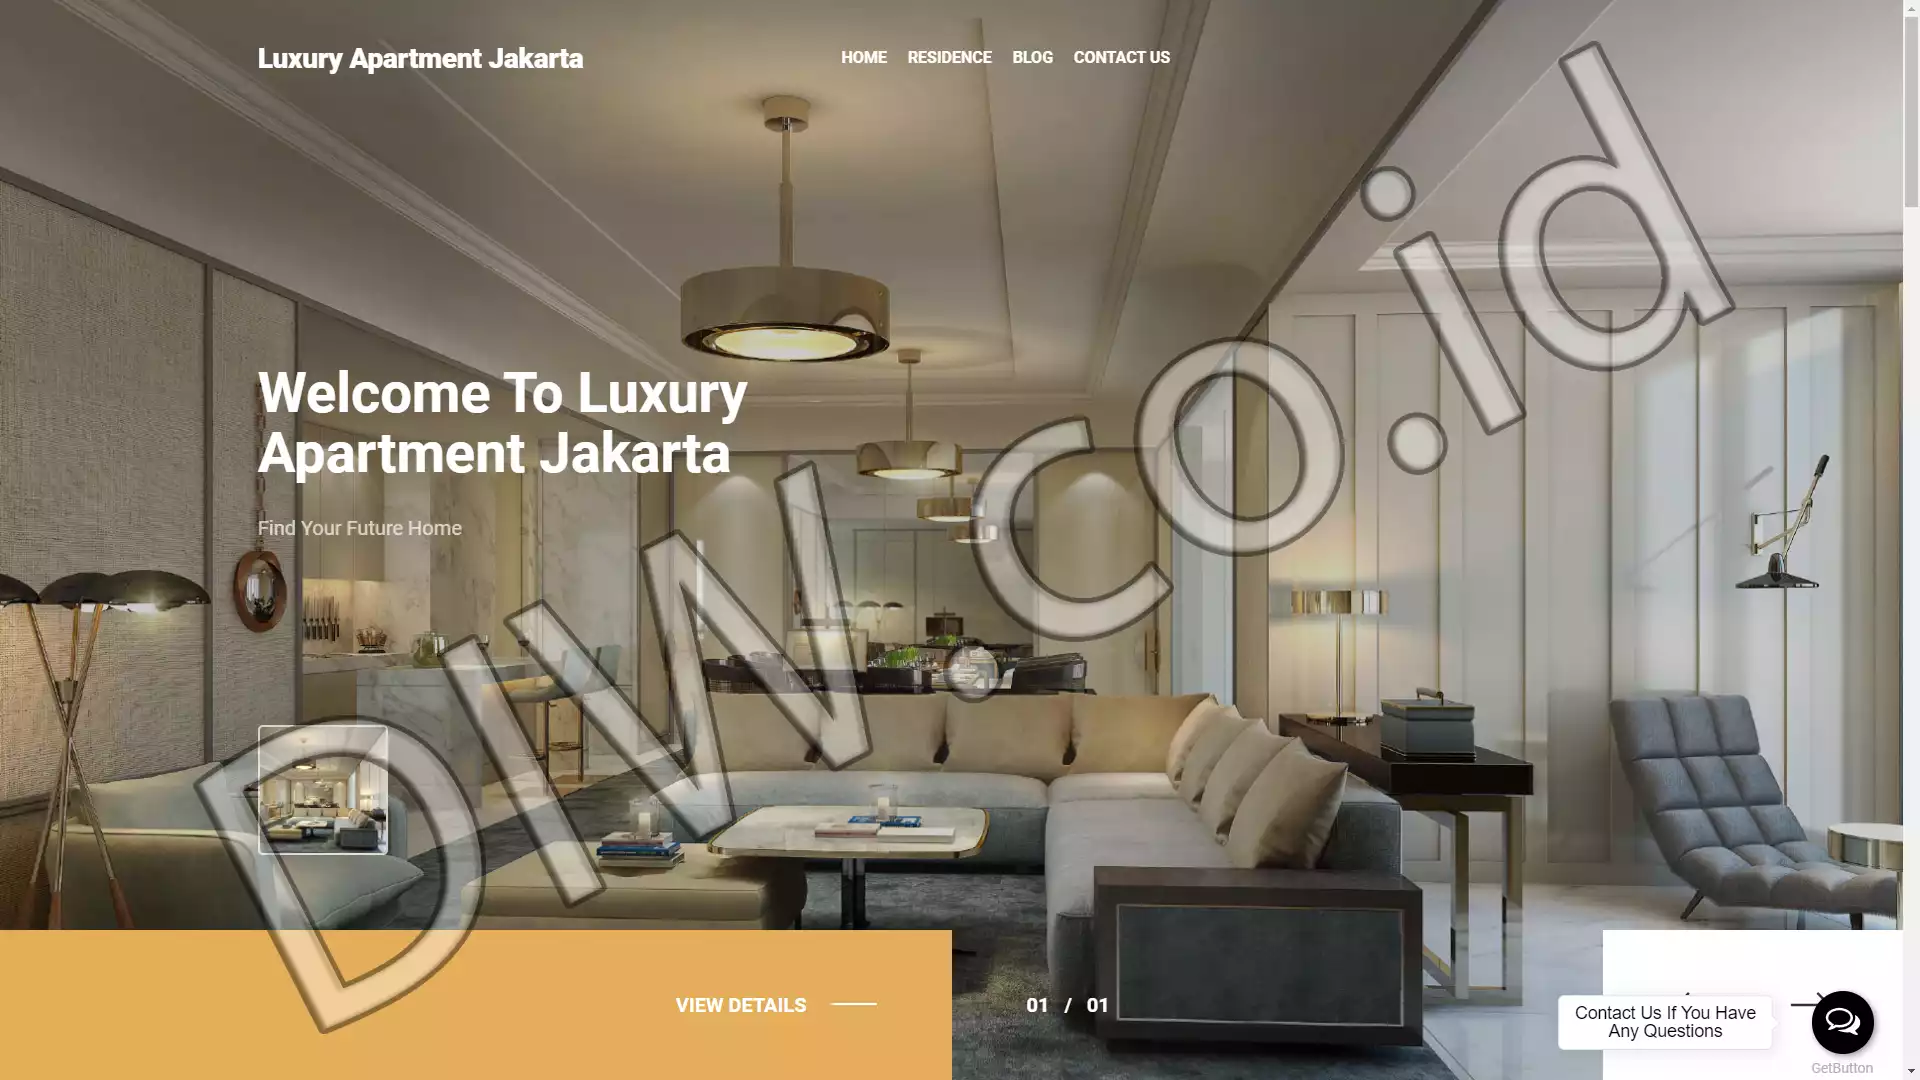 Portfolio - Luxury Apartment Jakarta - DIW.co.id (Digital In Website) Jasa Pembuatan Website dan Program Skripsi